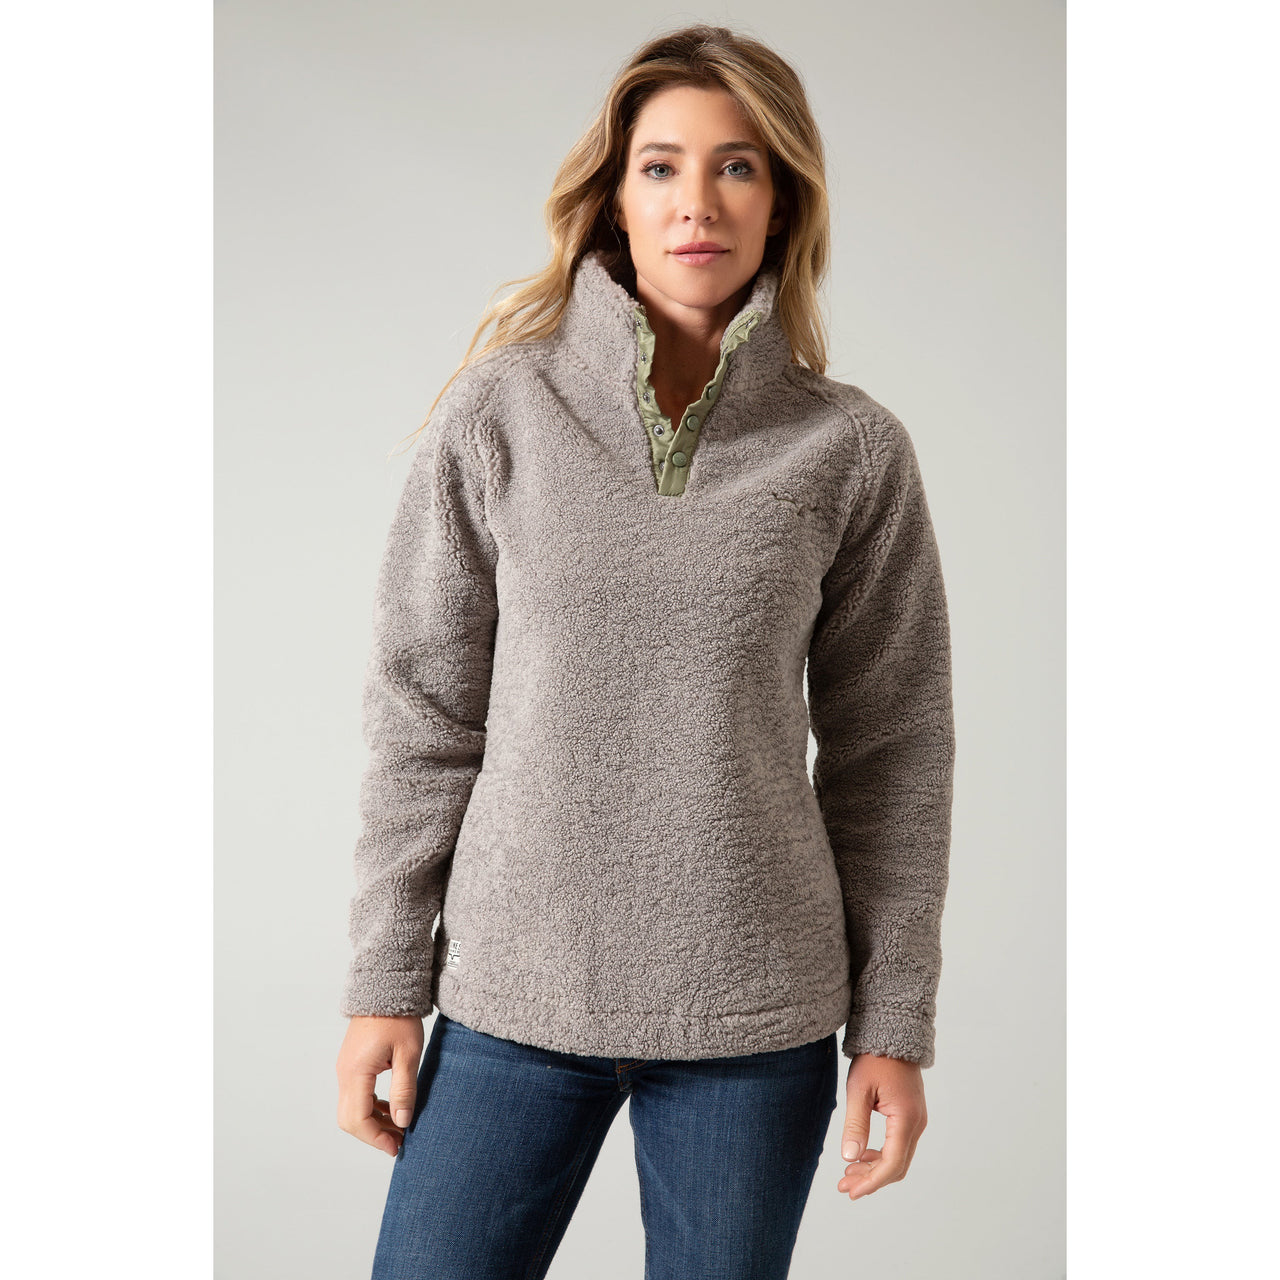 Kimes Women's Fozzie Pullover Sweater